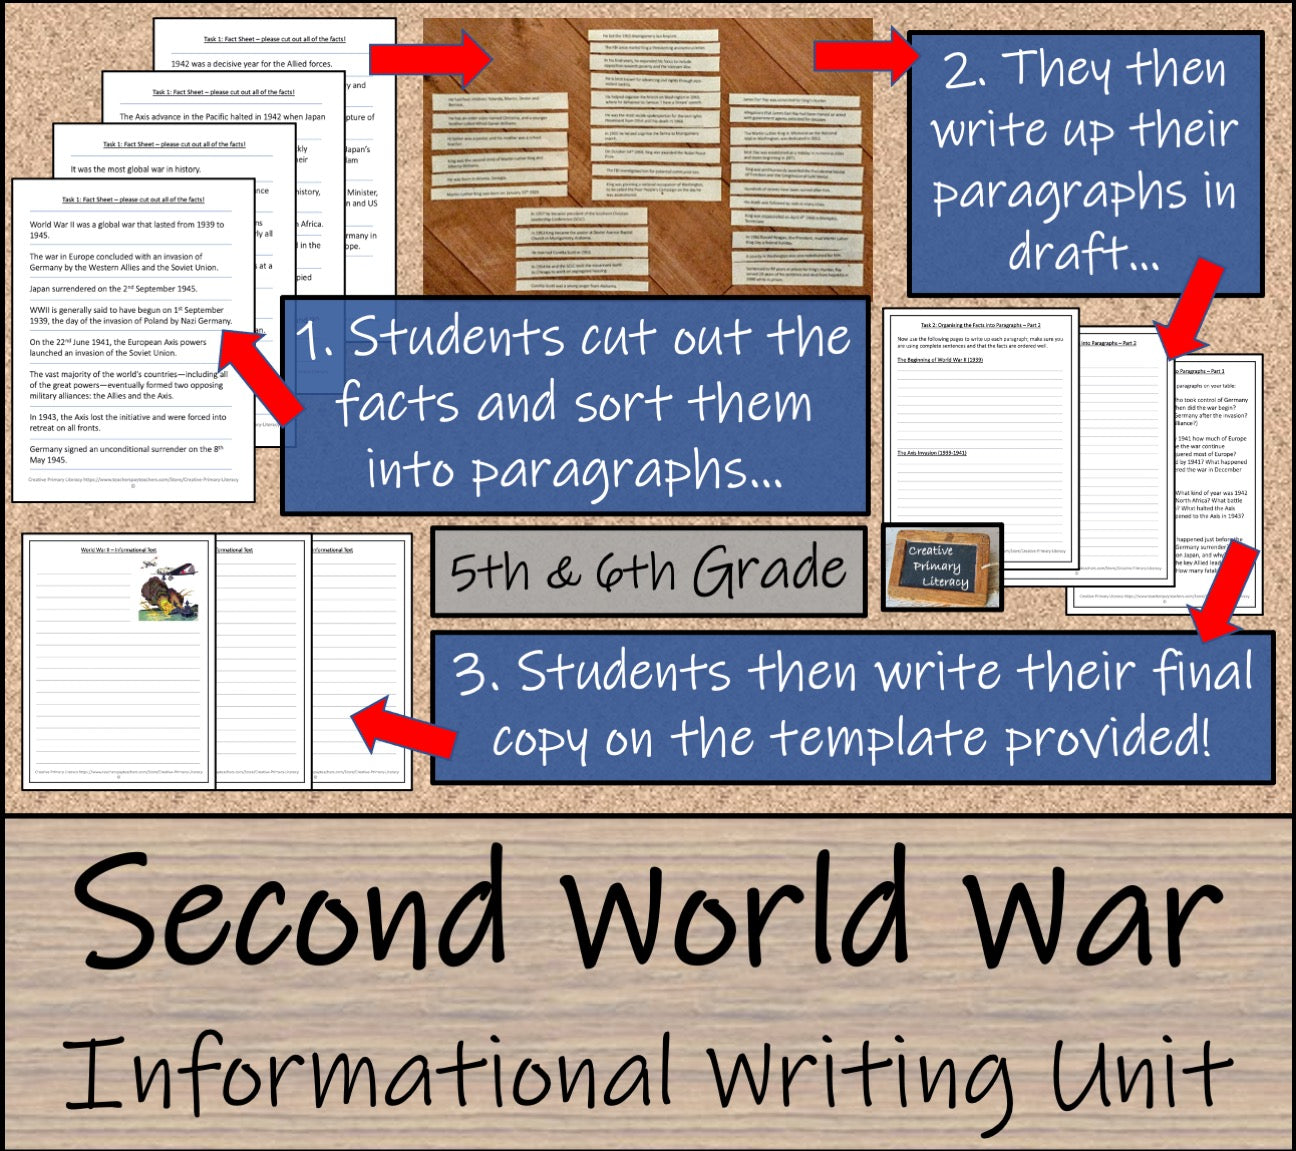 World War II Informational Writing Unit | 5th Grade & 6th Grade